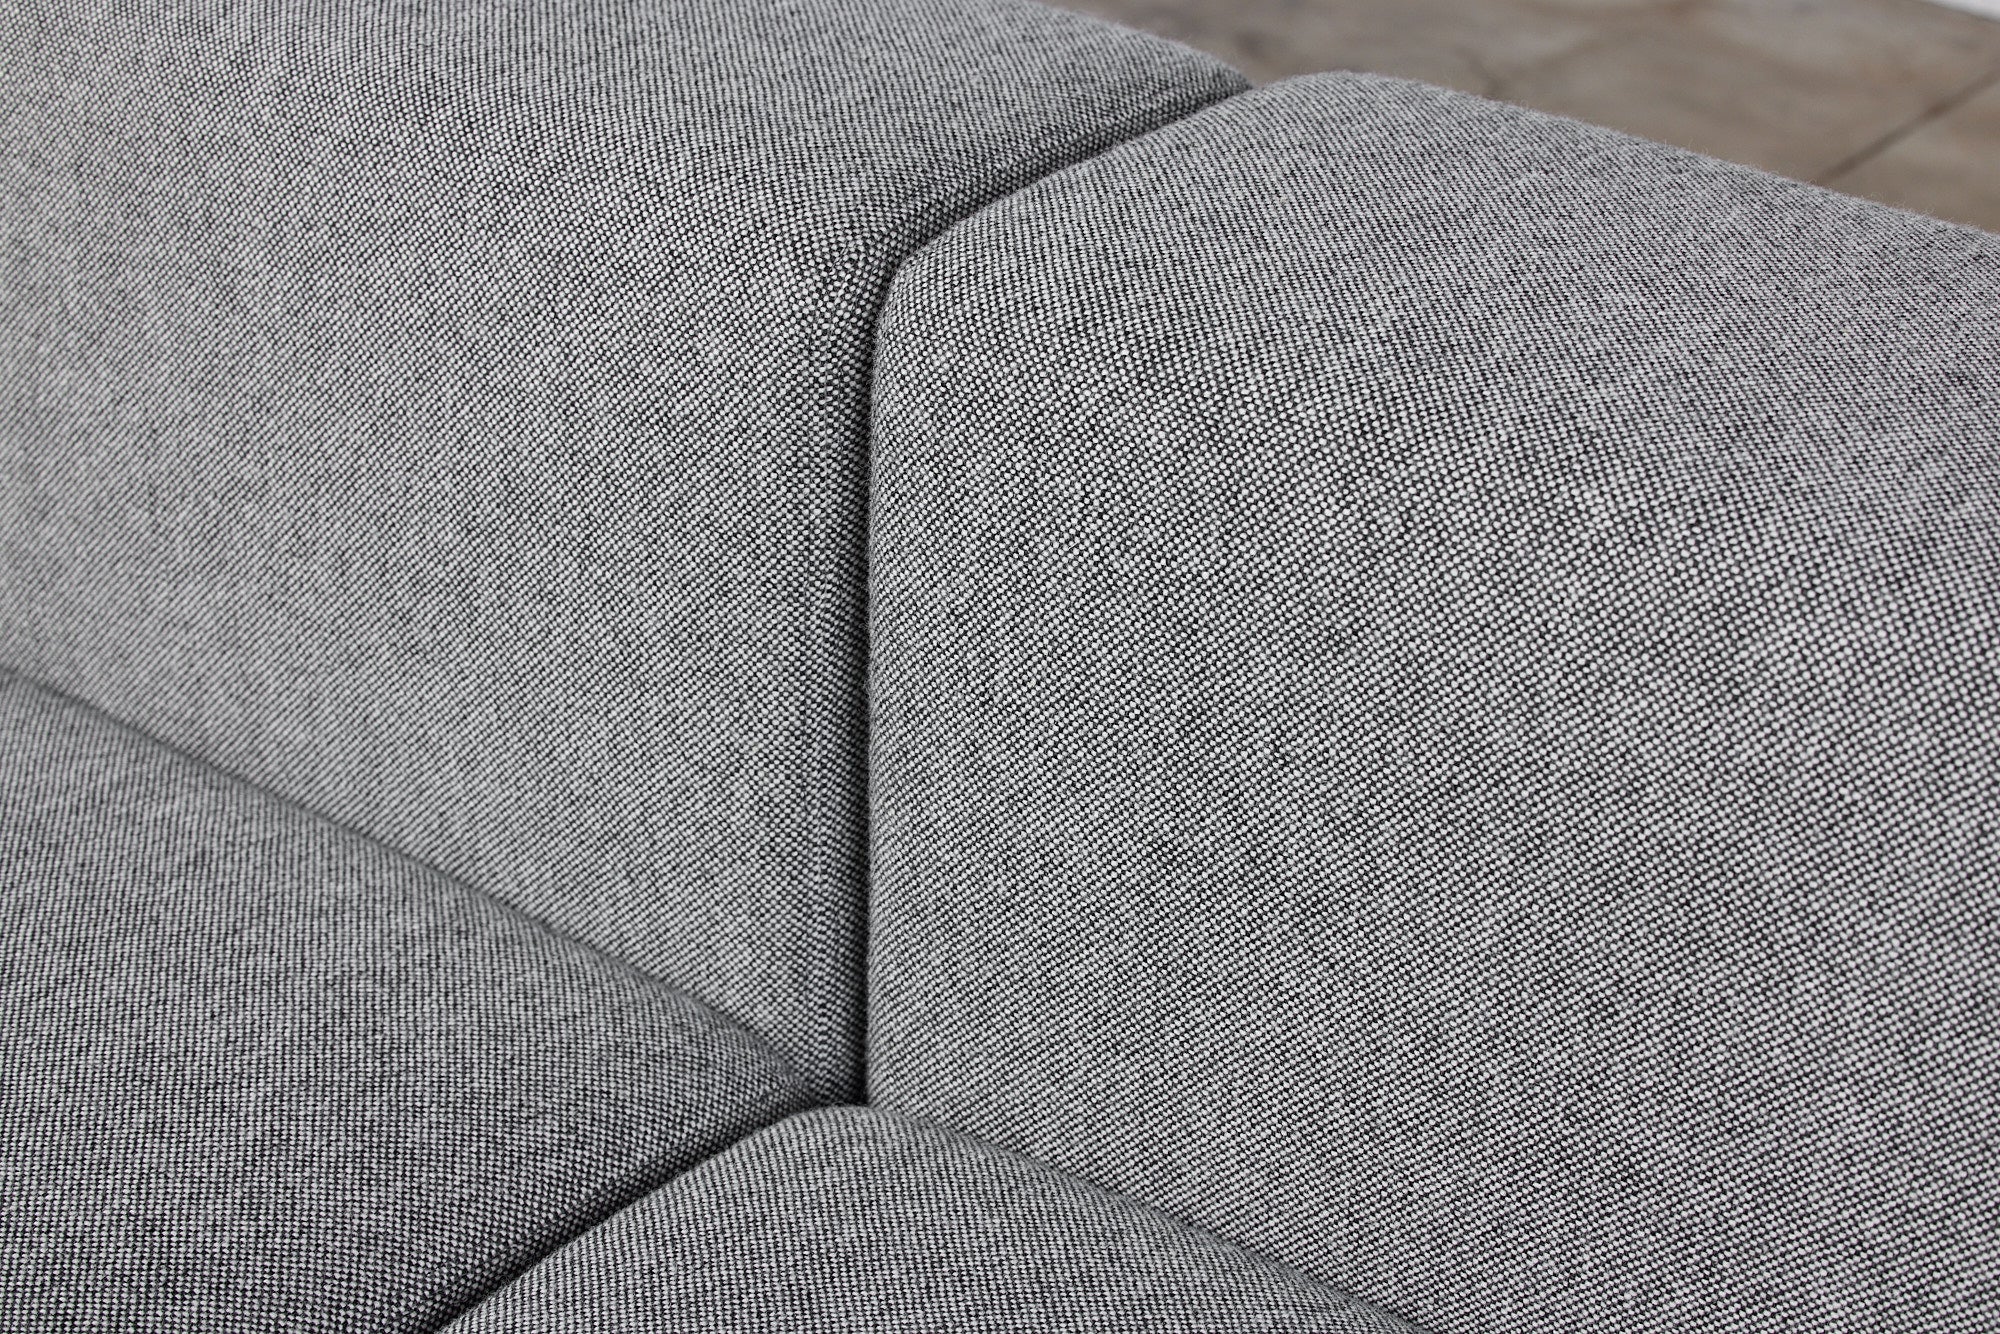 Pair of Giancarlo Piretti Style Modern Cubic Sofa Seats